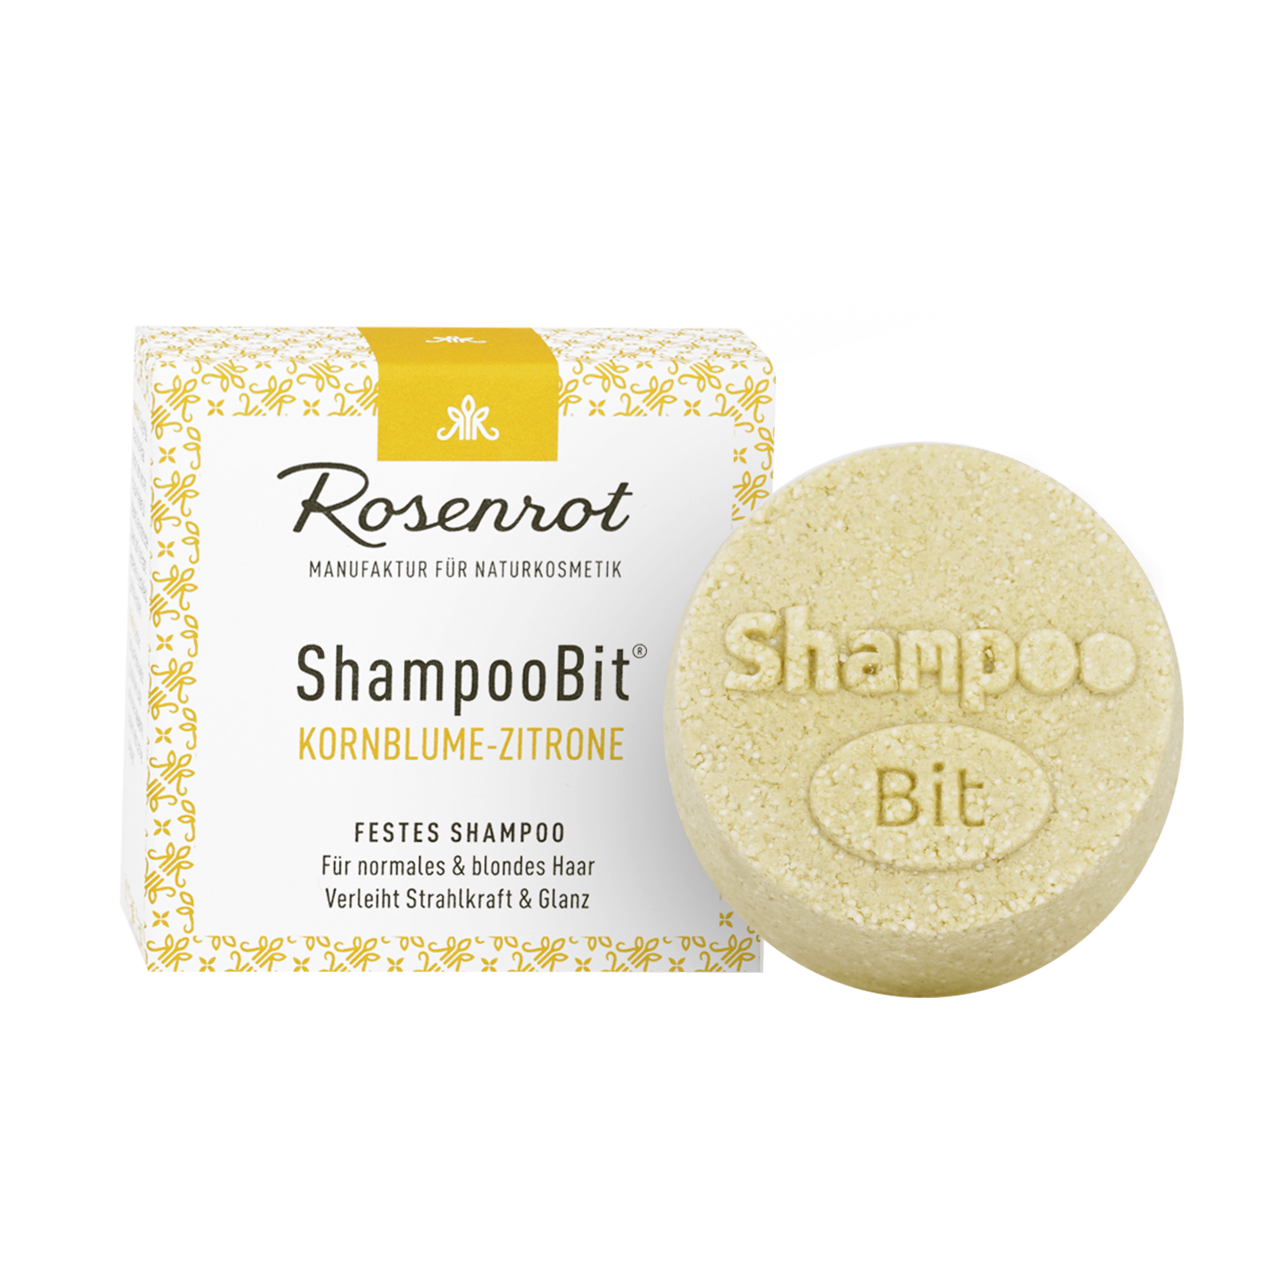 ShampooBit® - Cornflower-Lemon